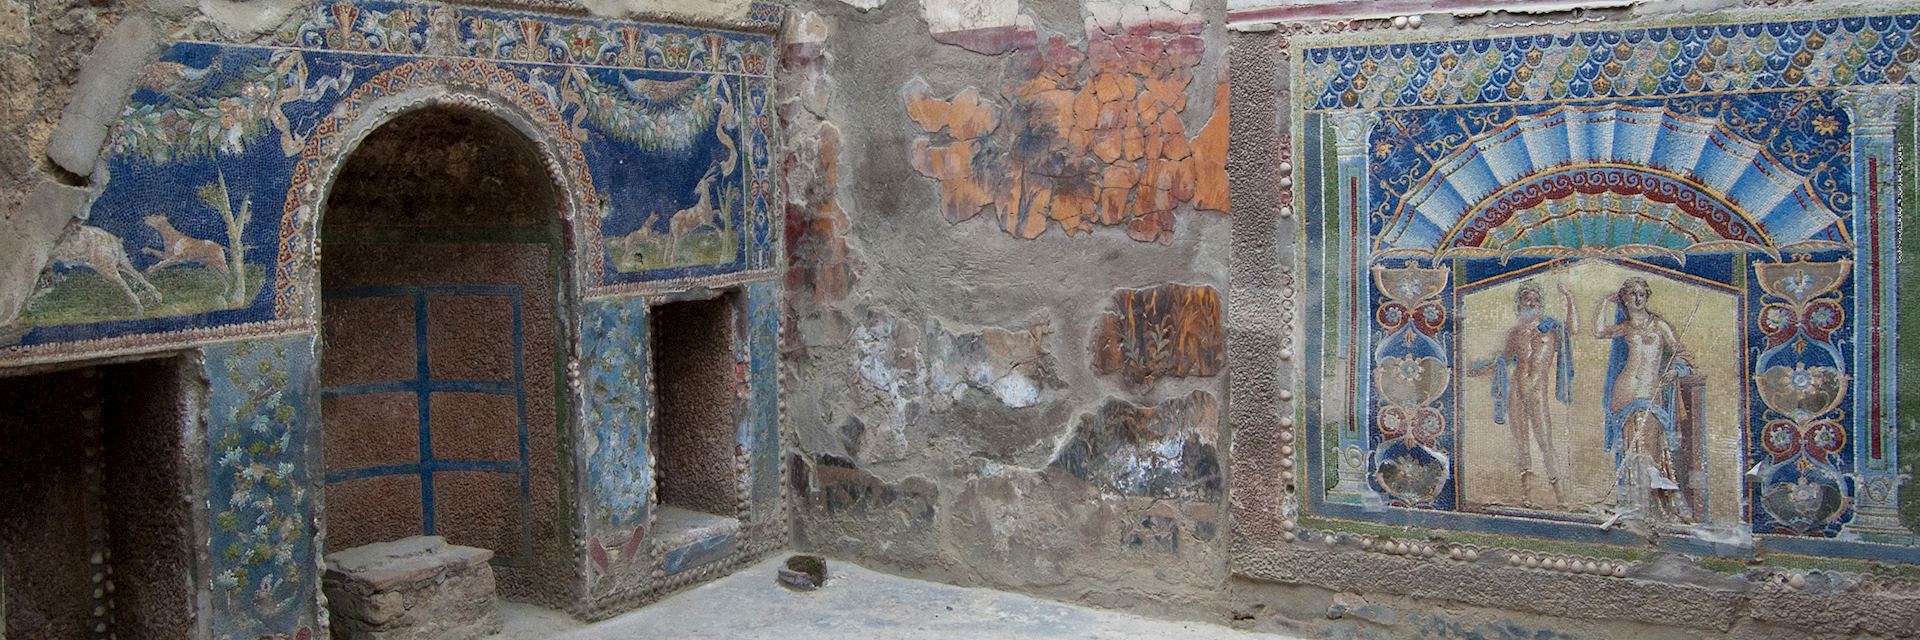 Mosaics on the walls of a villa, Herculaneum 